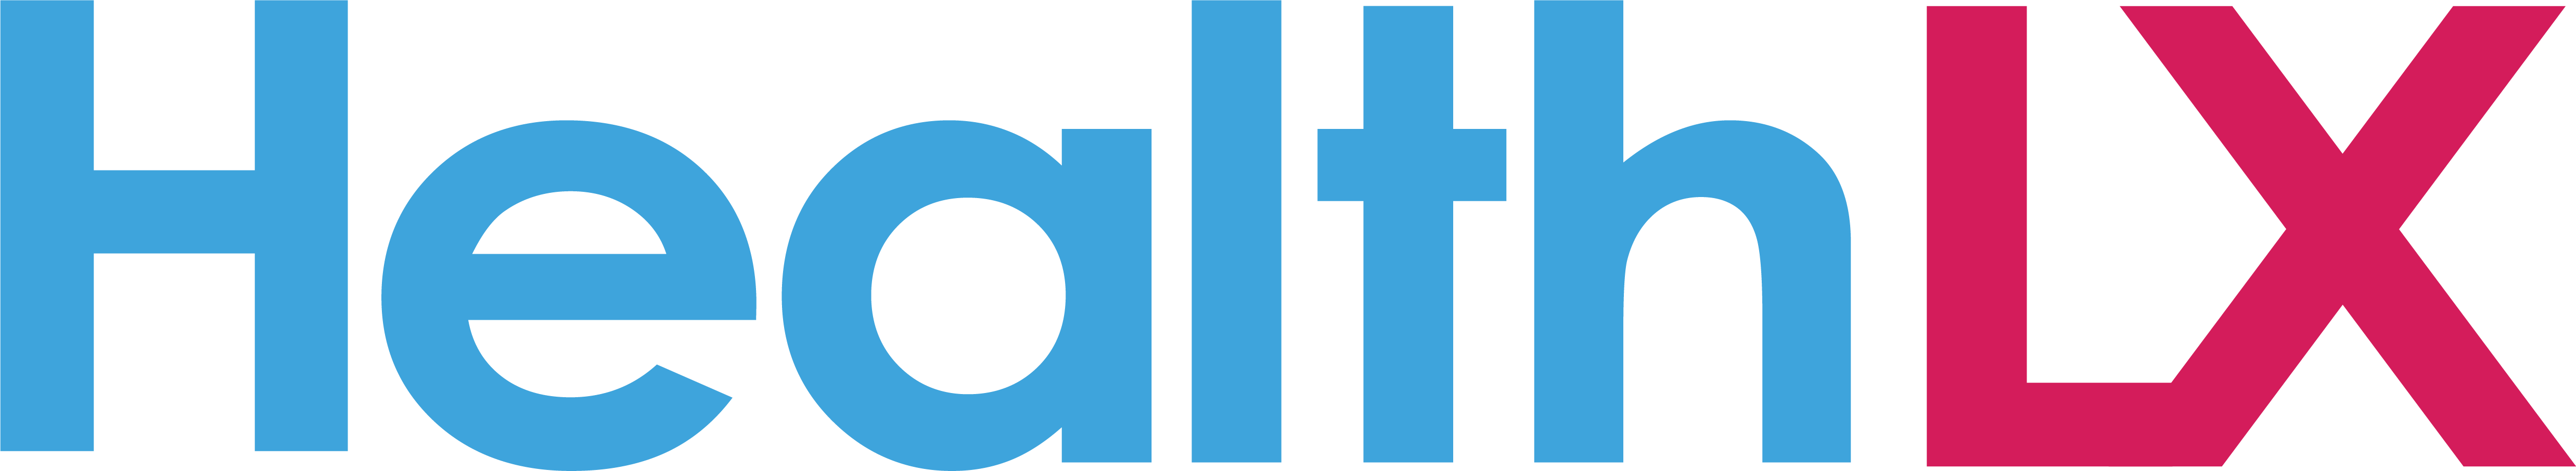 HLX Full Logo - color